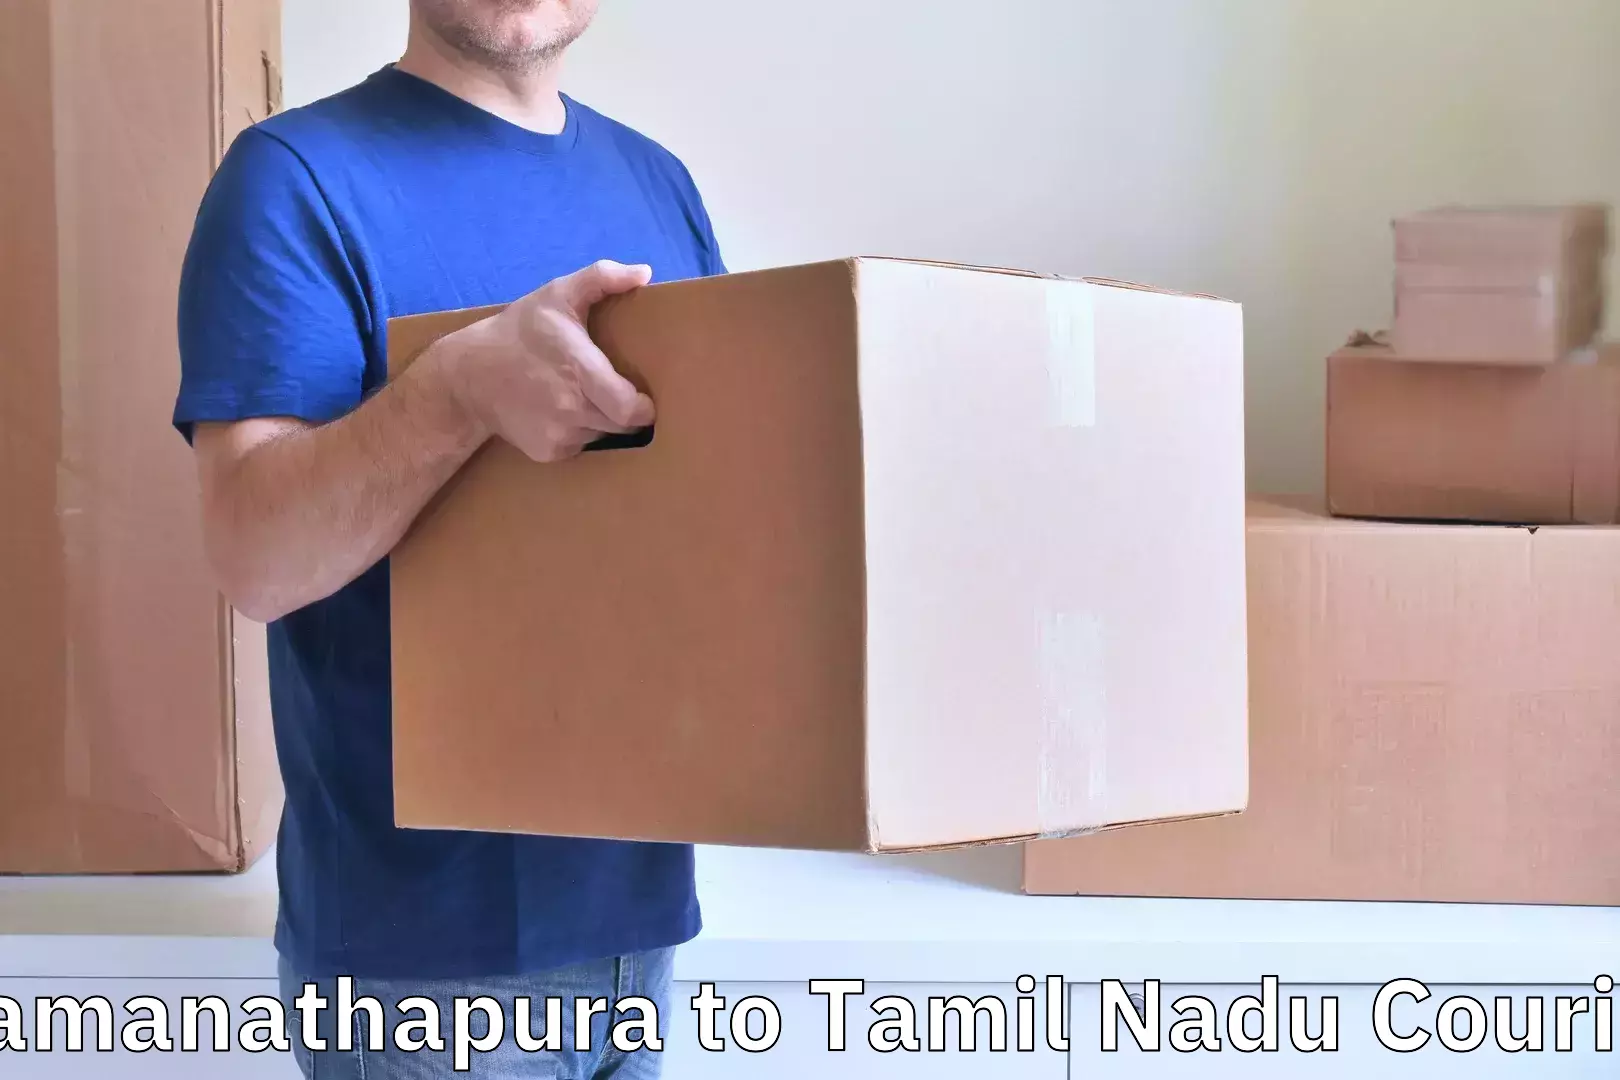 Luggage delivery app Ramanathapura to Kulittalai